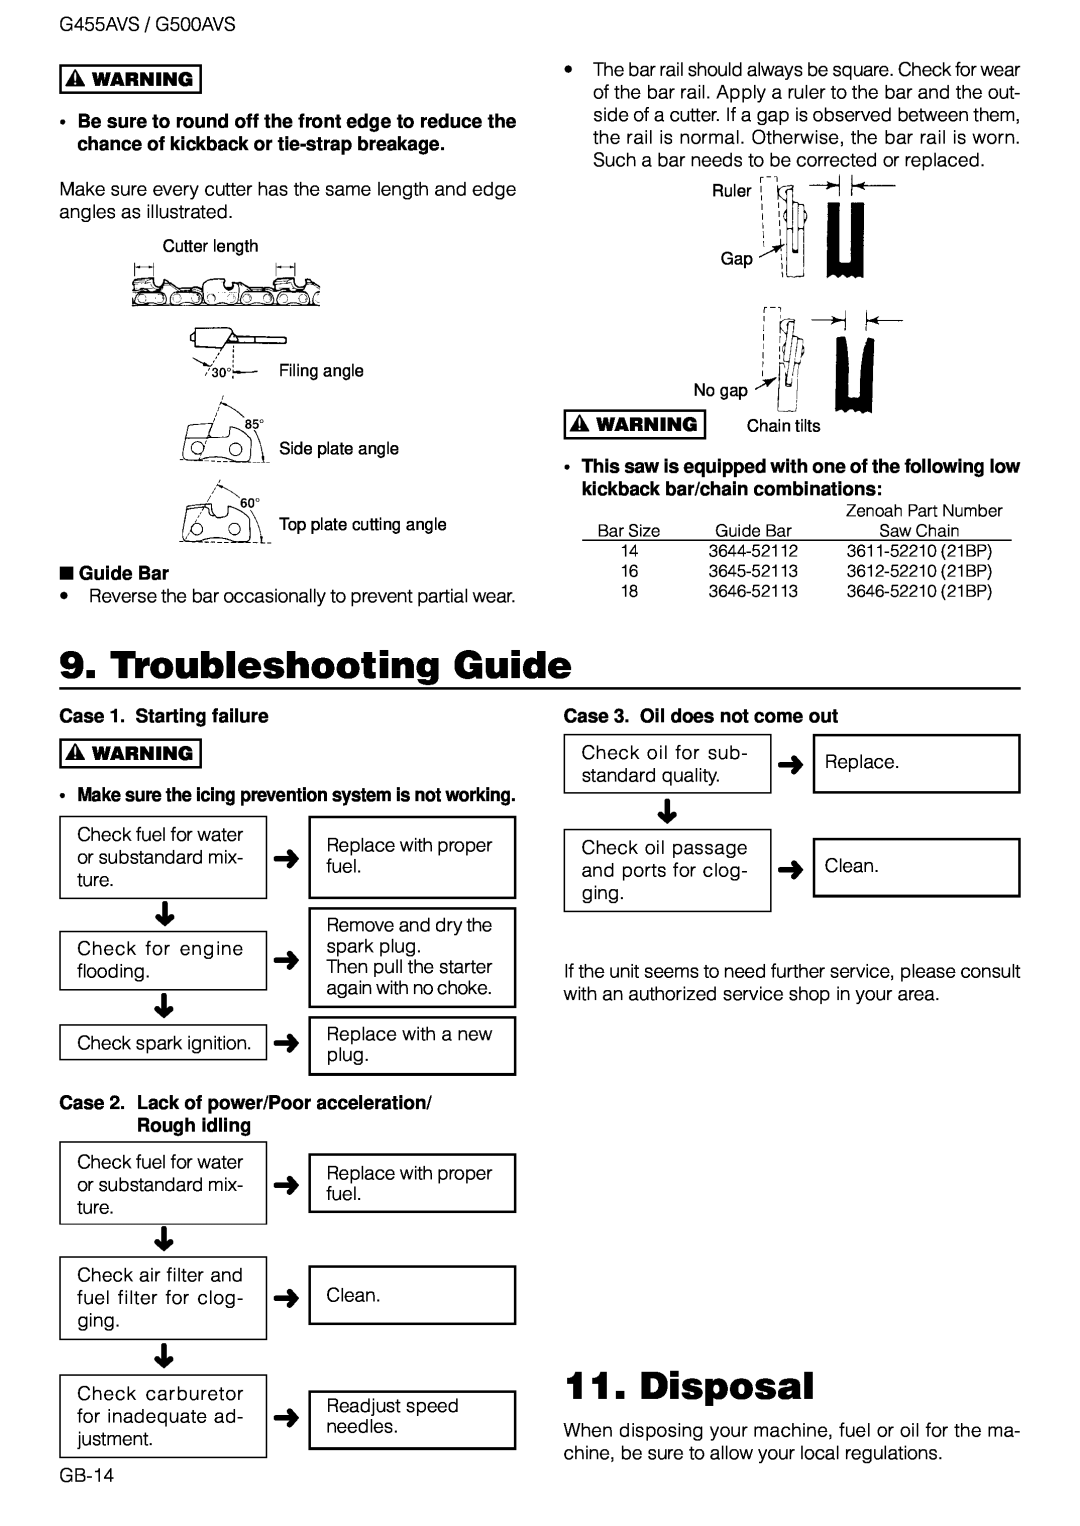 Zenoah G500AVS owner manual Troubleshooting Guide, Disposal 